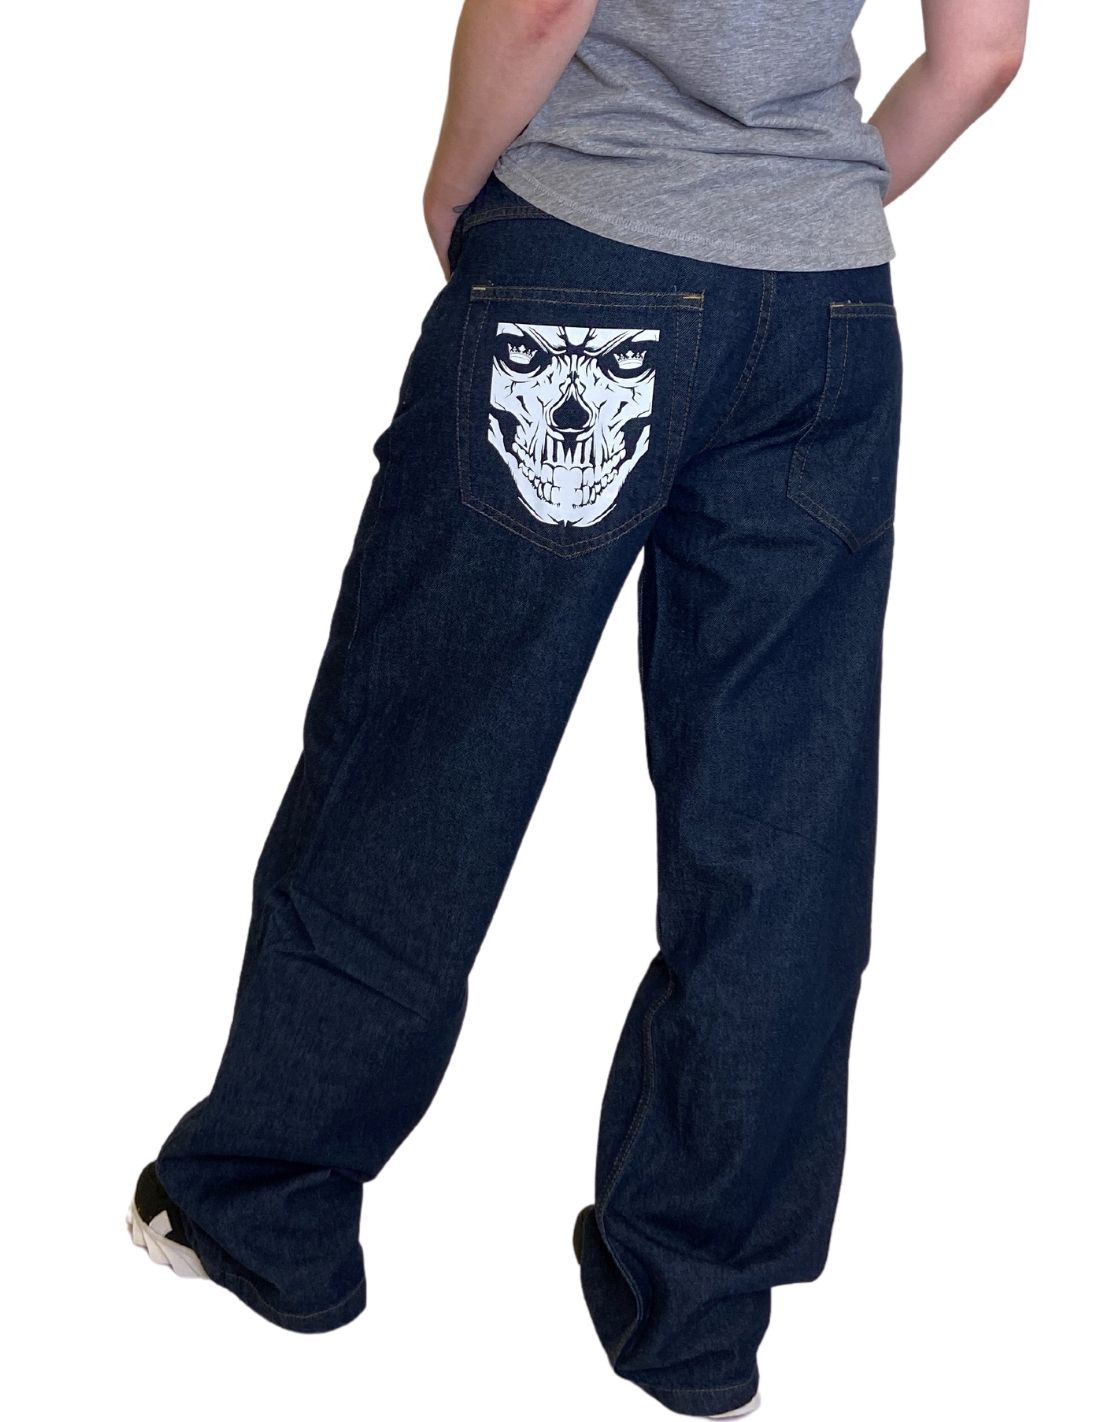 BSAT Skull Baggy Jeans Indigo Blue